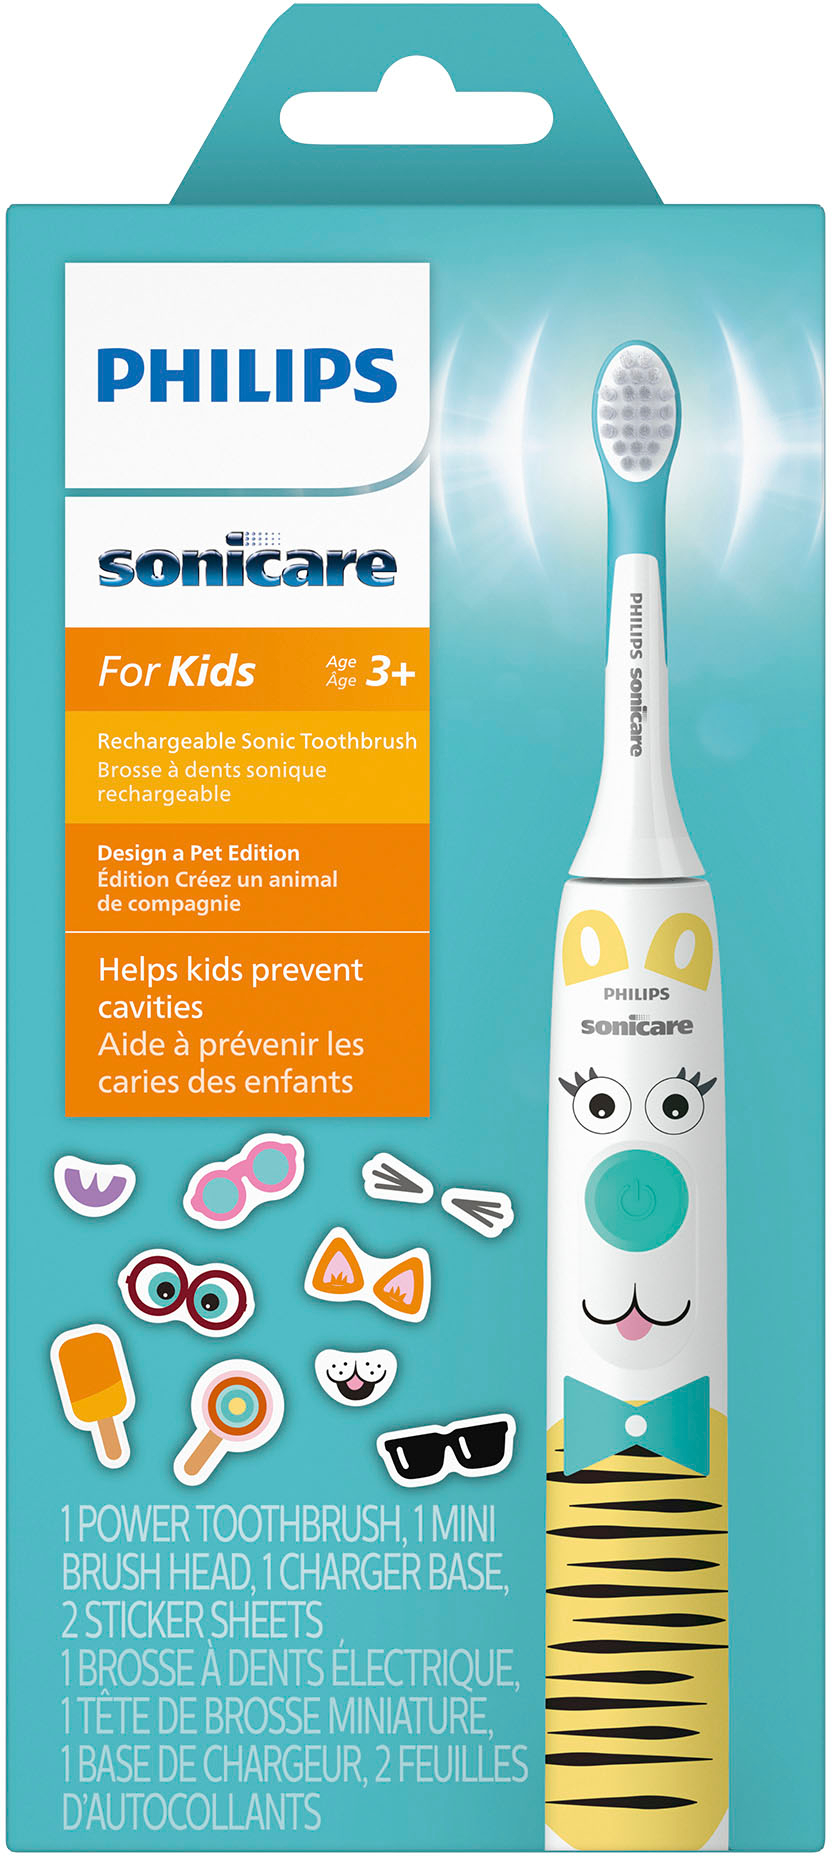 Sonicare For Kids Design A Pet Edition